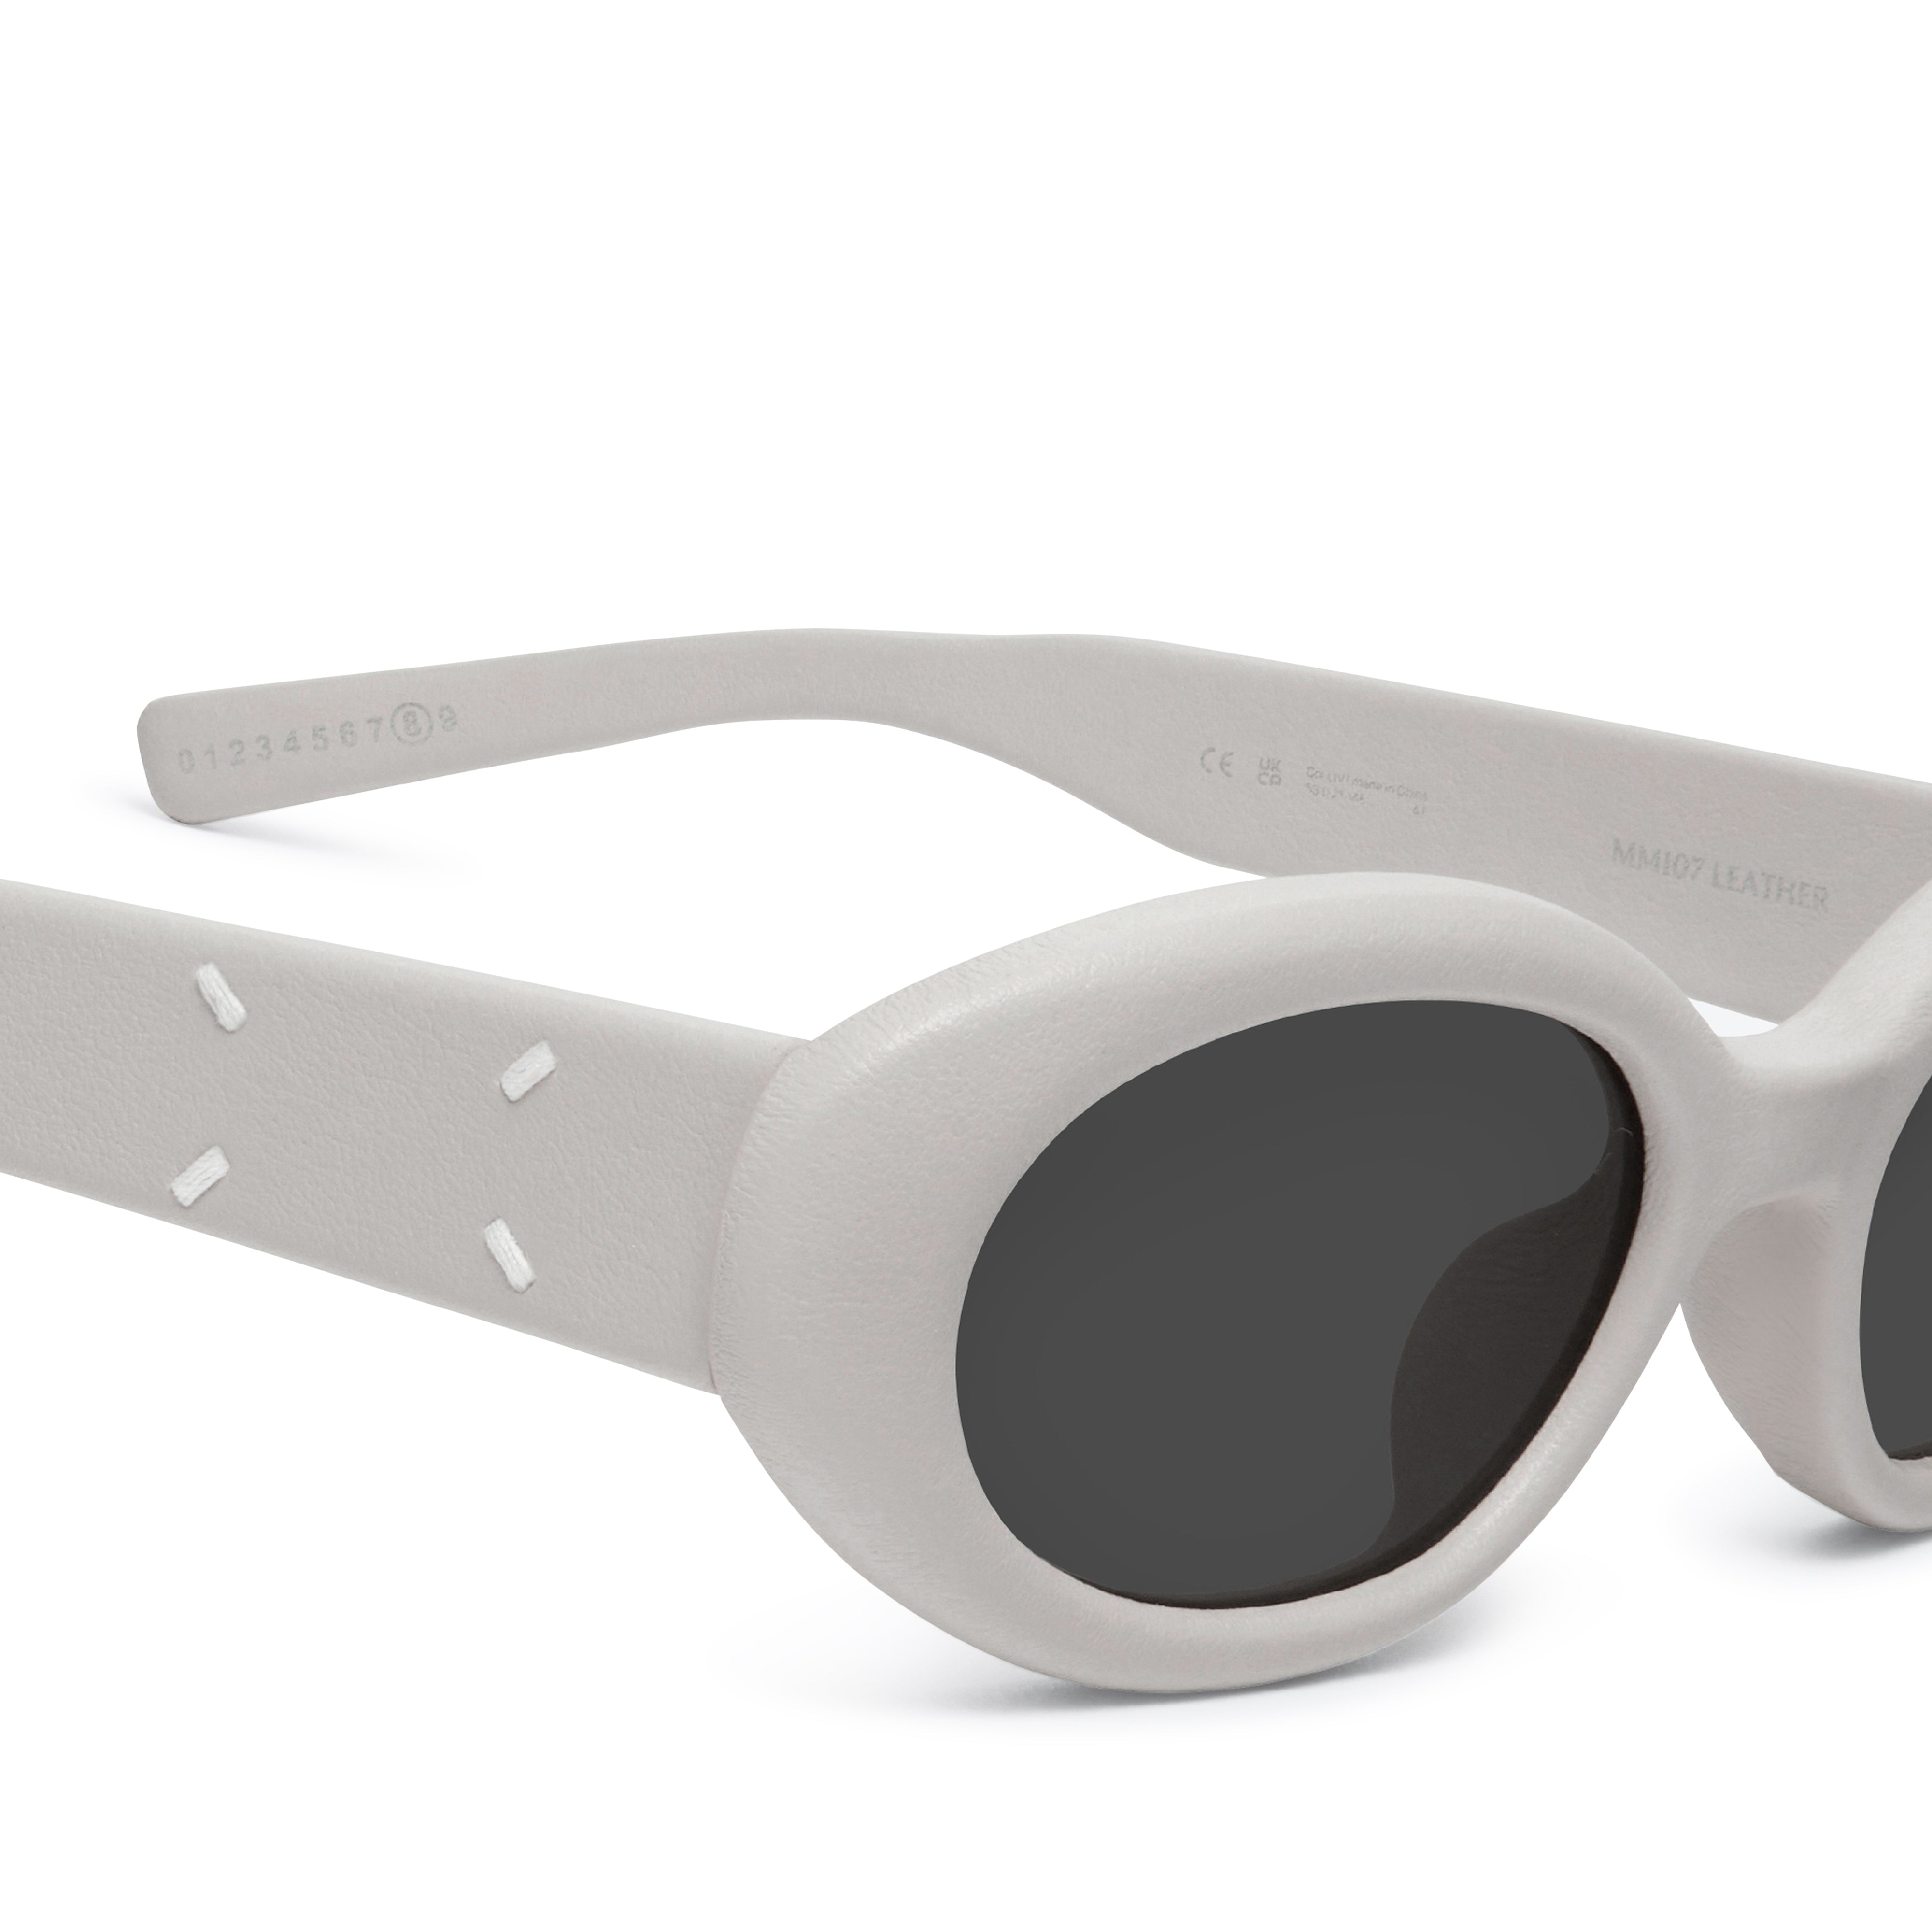 Maison Margiela x Gentle Monster: MM107 Leather-LIV1 Sunglasses (White) |  DSMNY E-SHOP